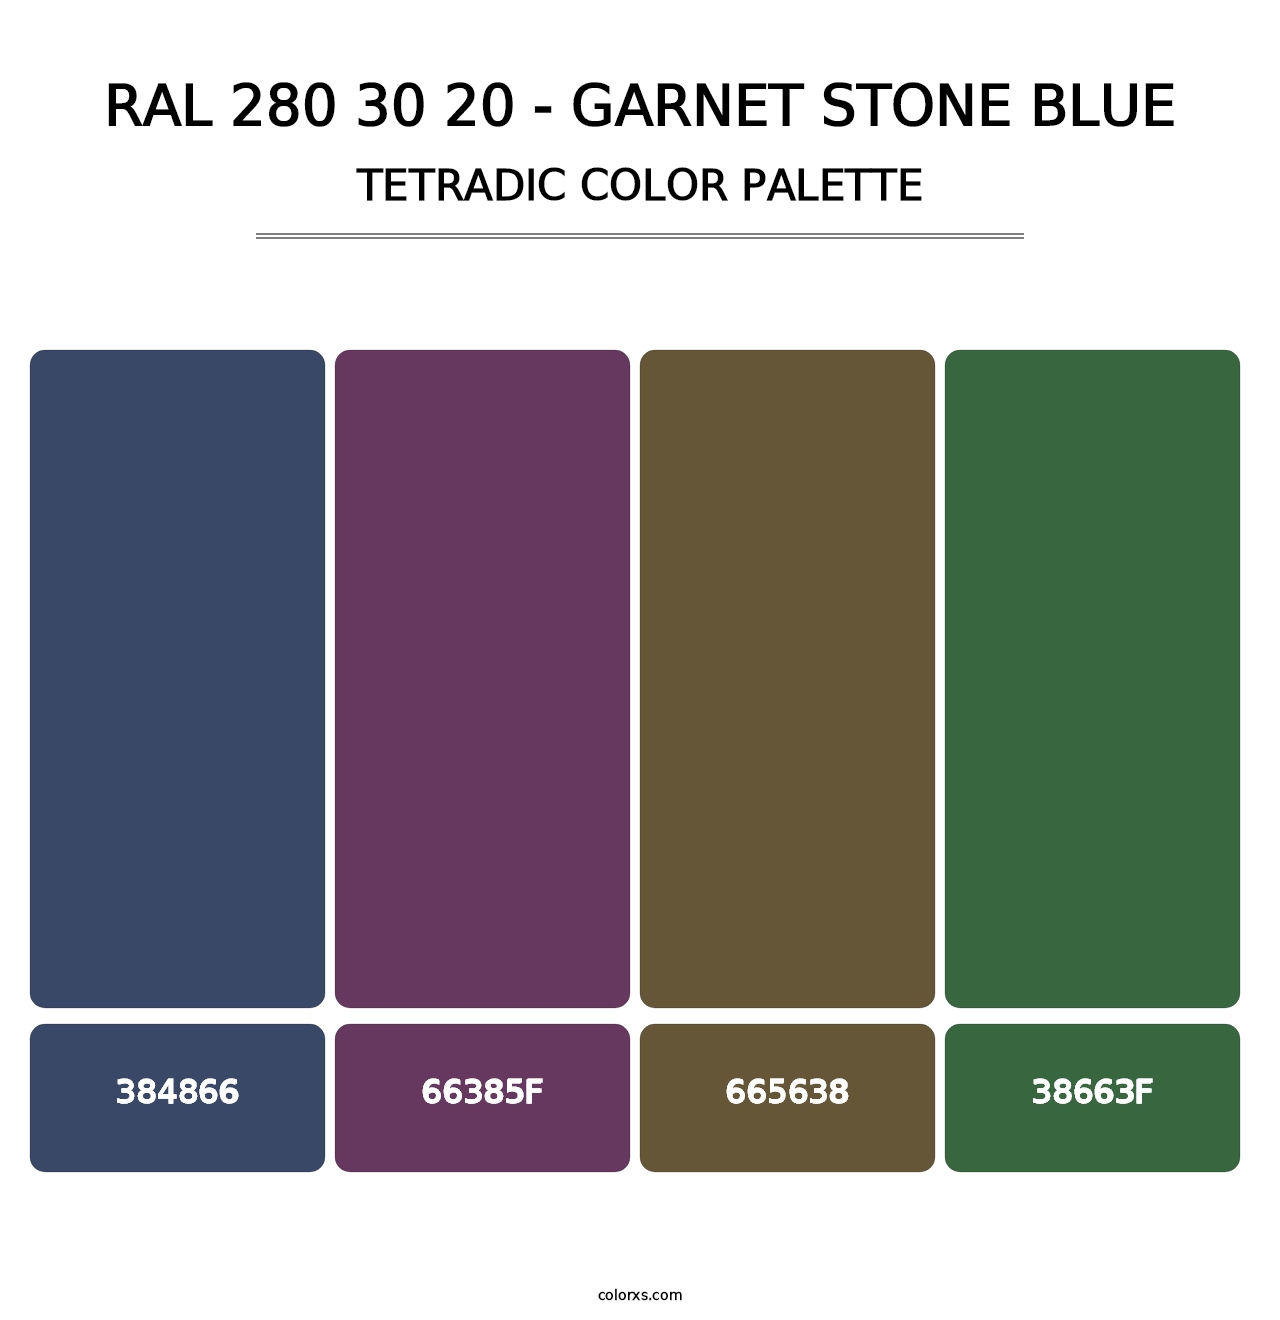 RAL 280 30 20 - Garnet Stone Blue - Tetradic Color Palette